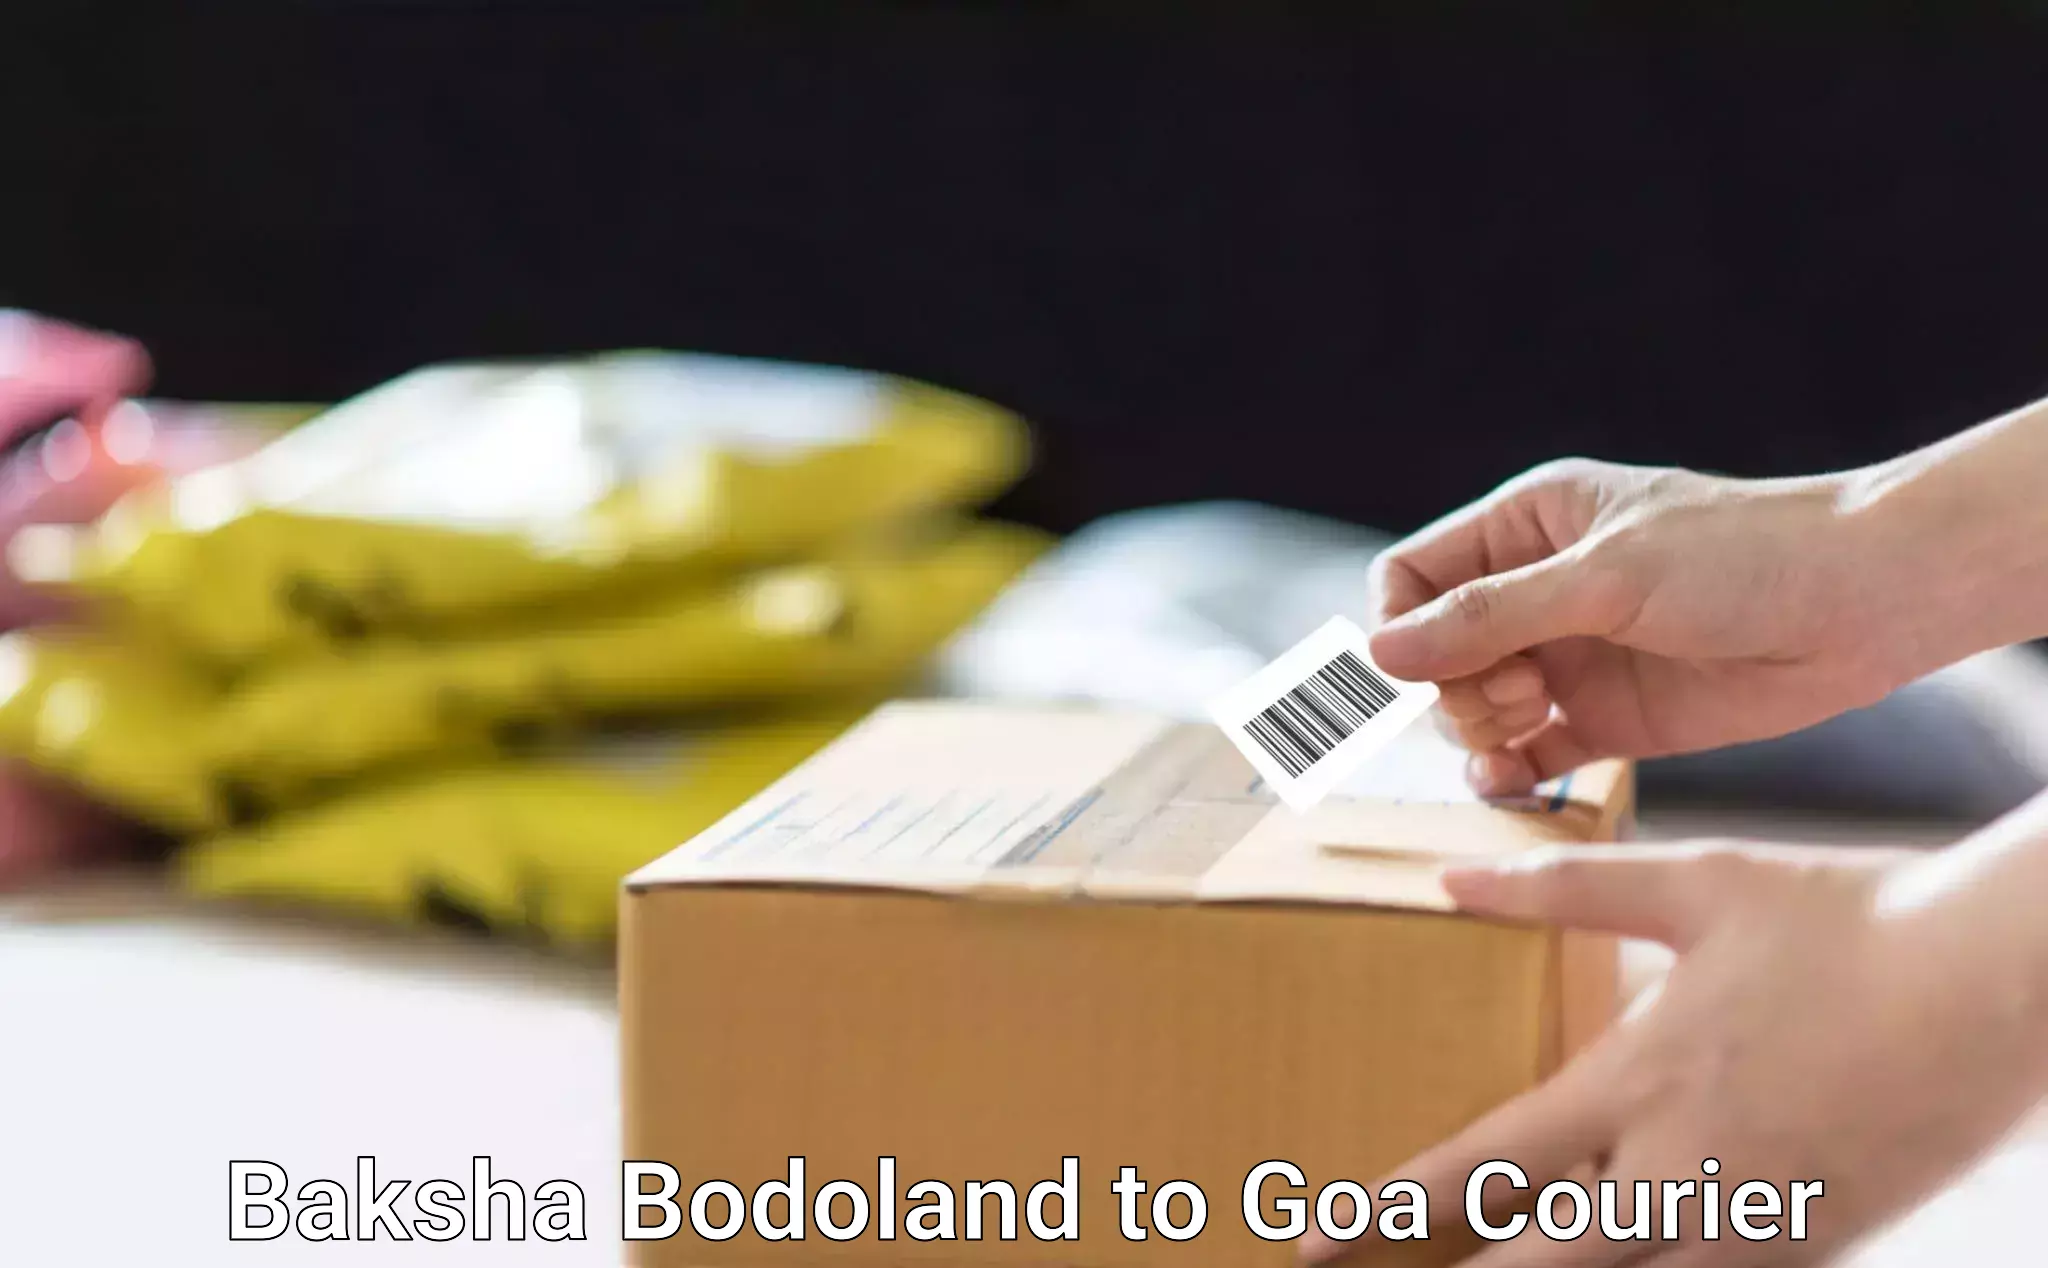 Next day courier Baksha Bodoland to Panaji